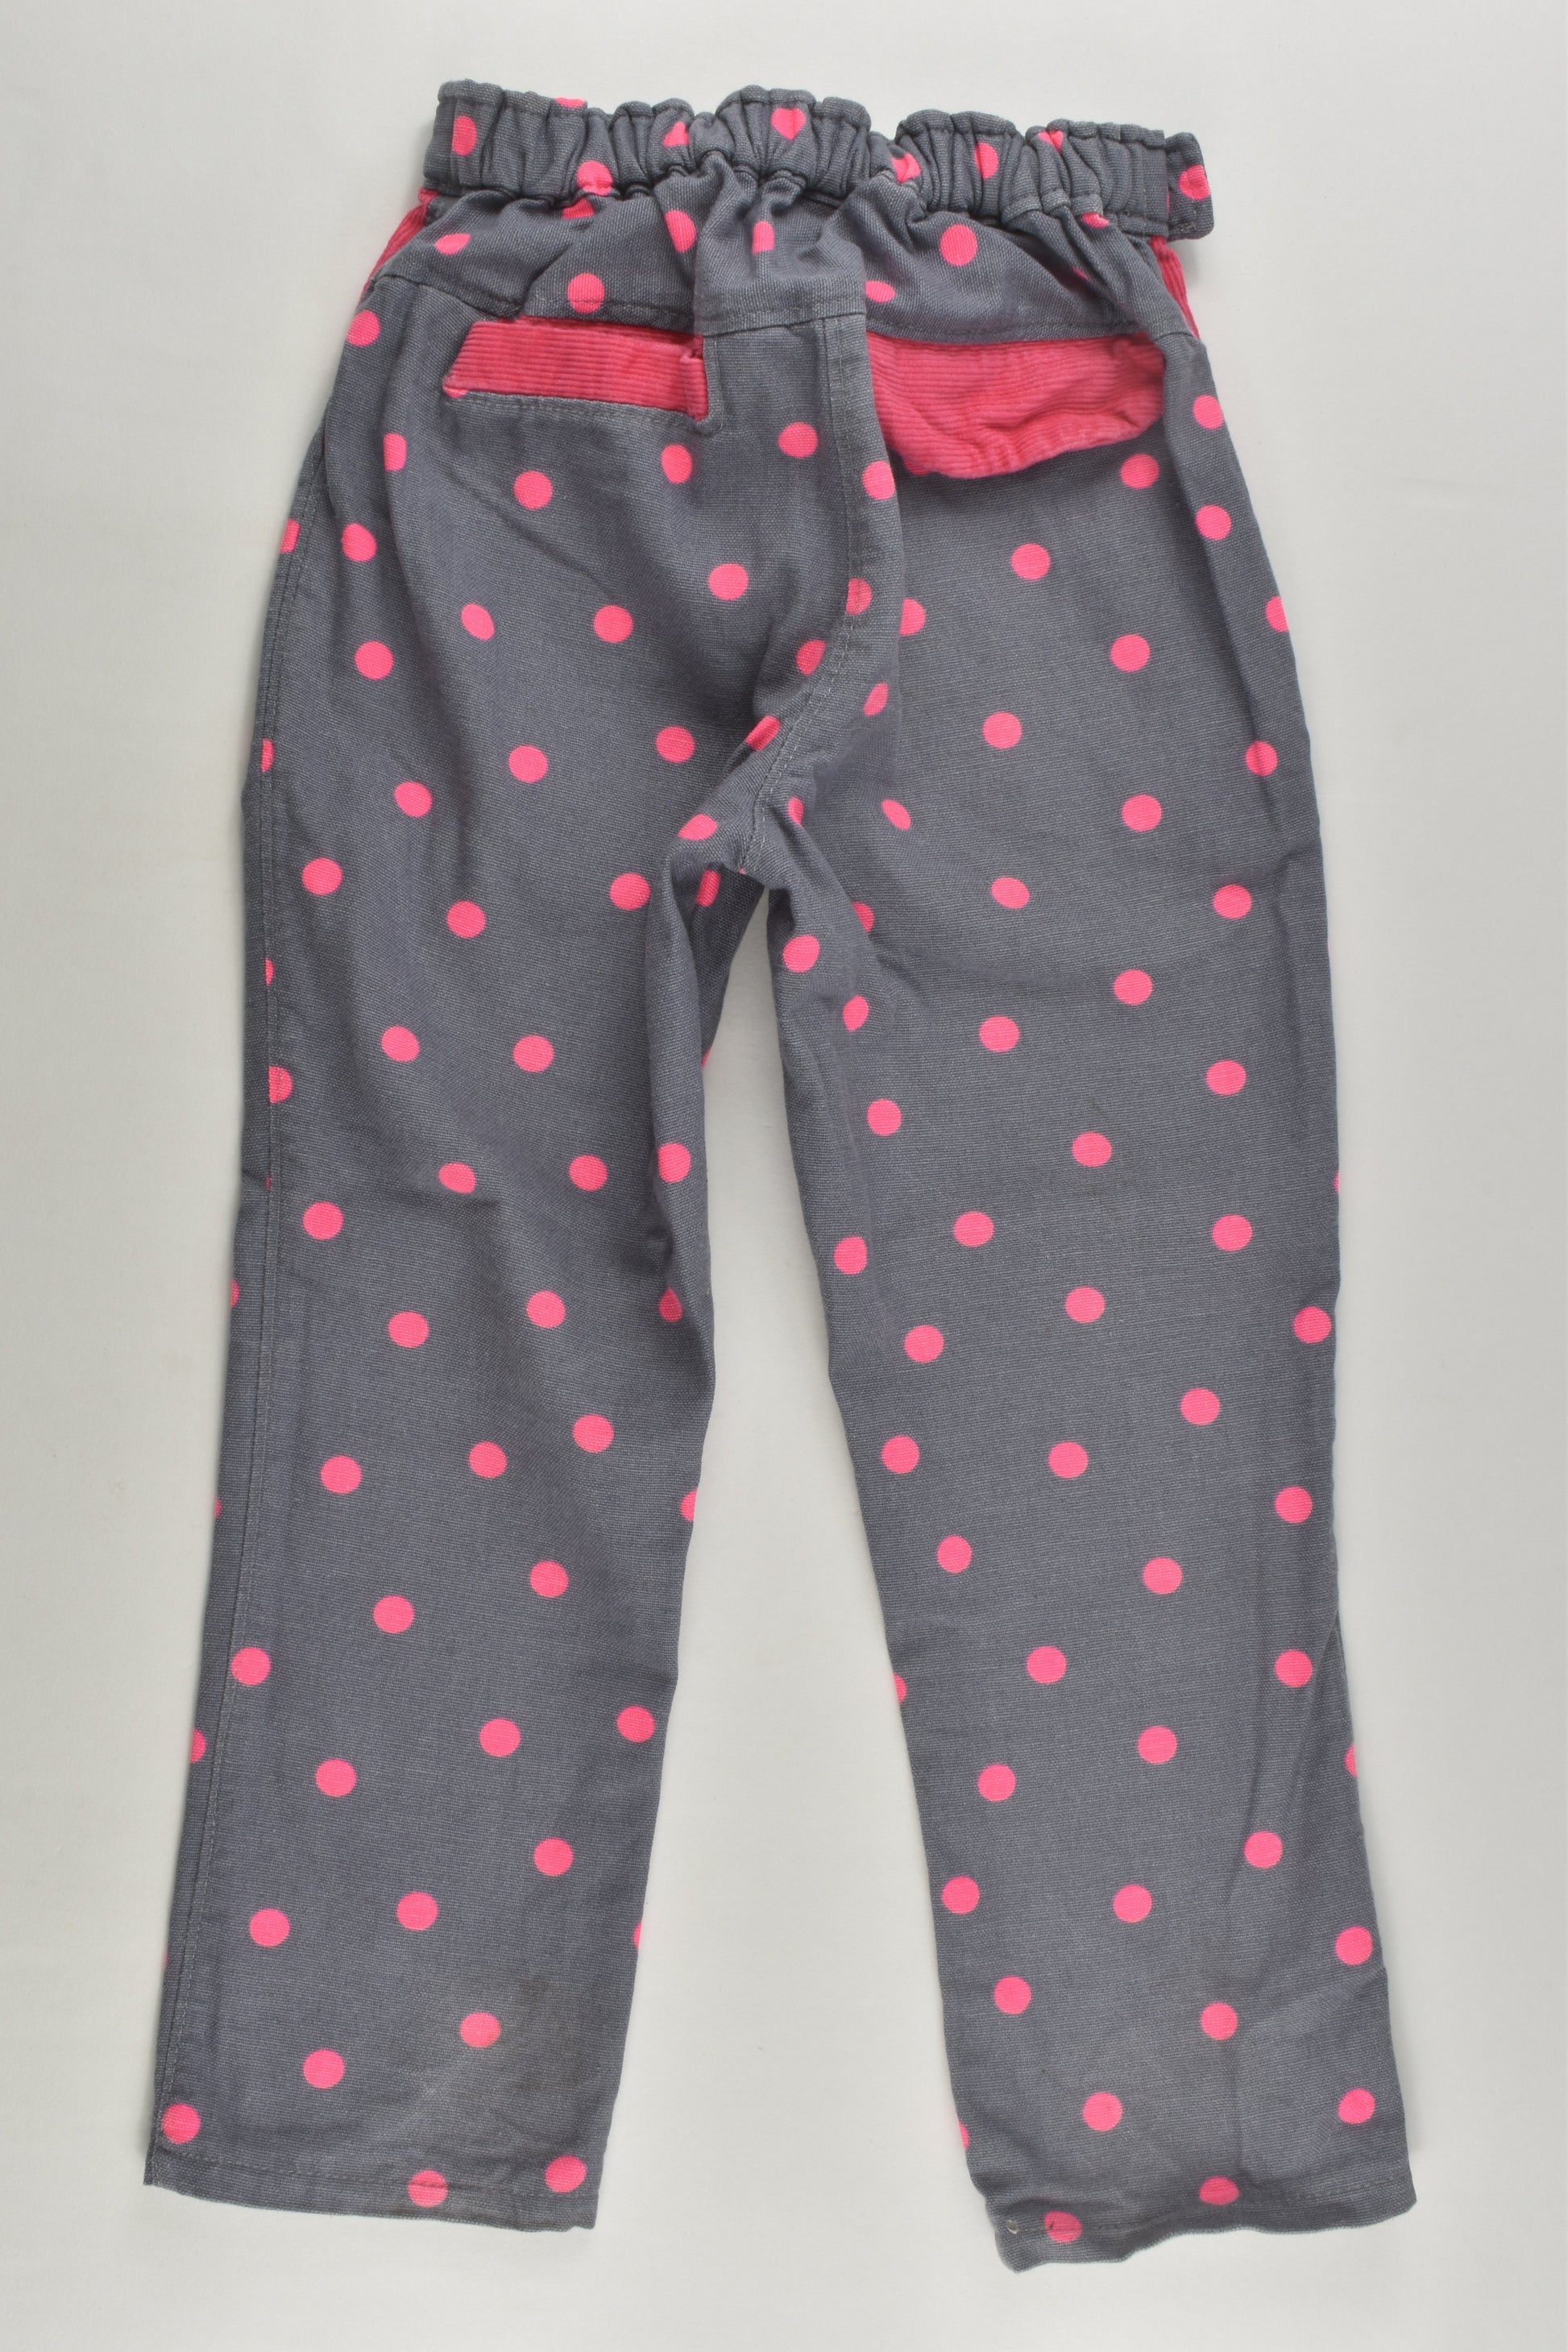 Handmade Size 3 Polka Dots Pants